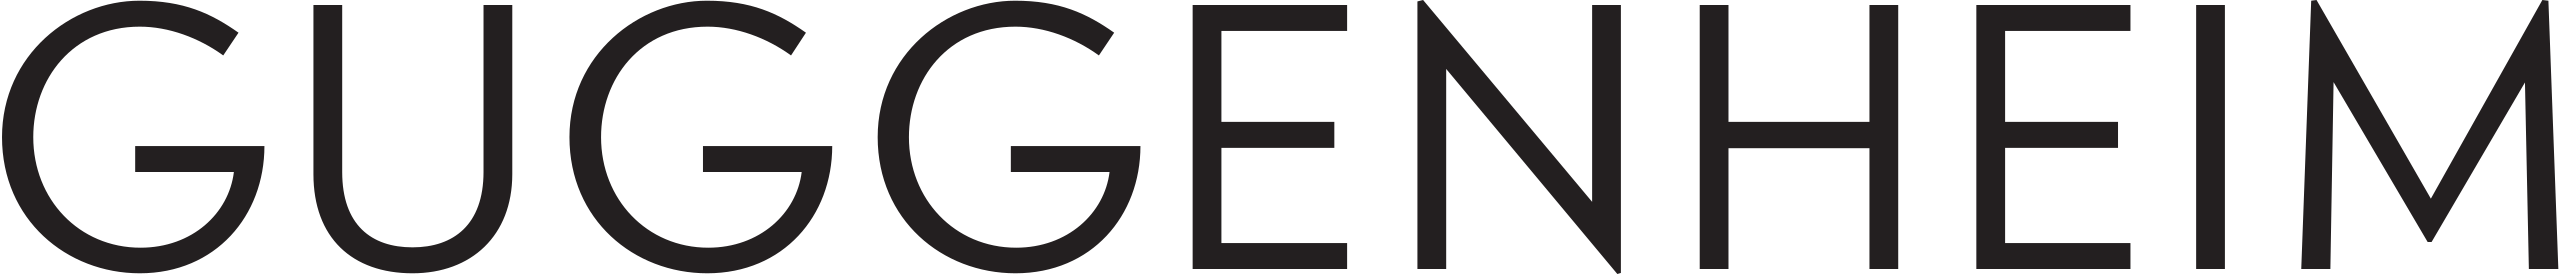 2560px-Guggenheim_Museum_Logo.svg